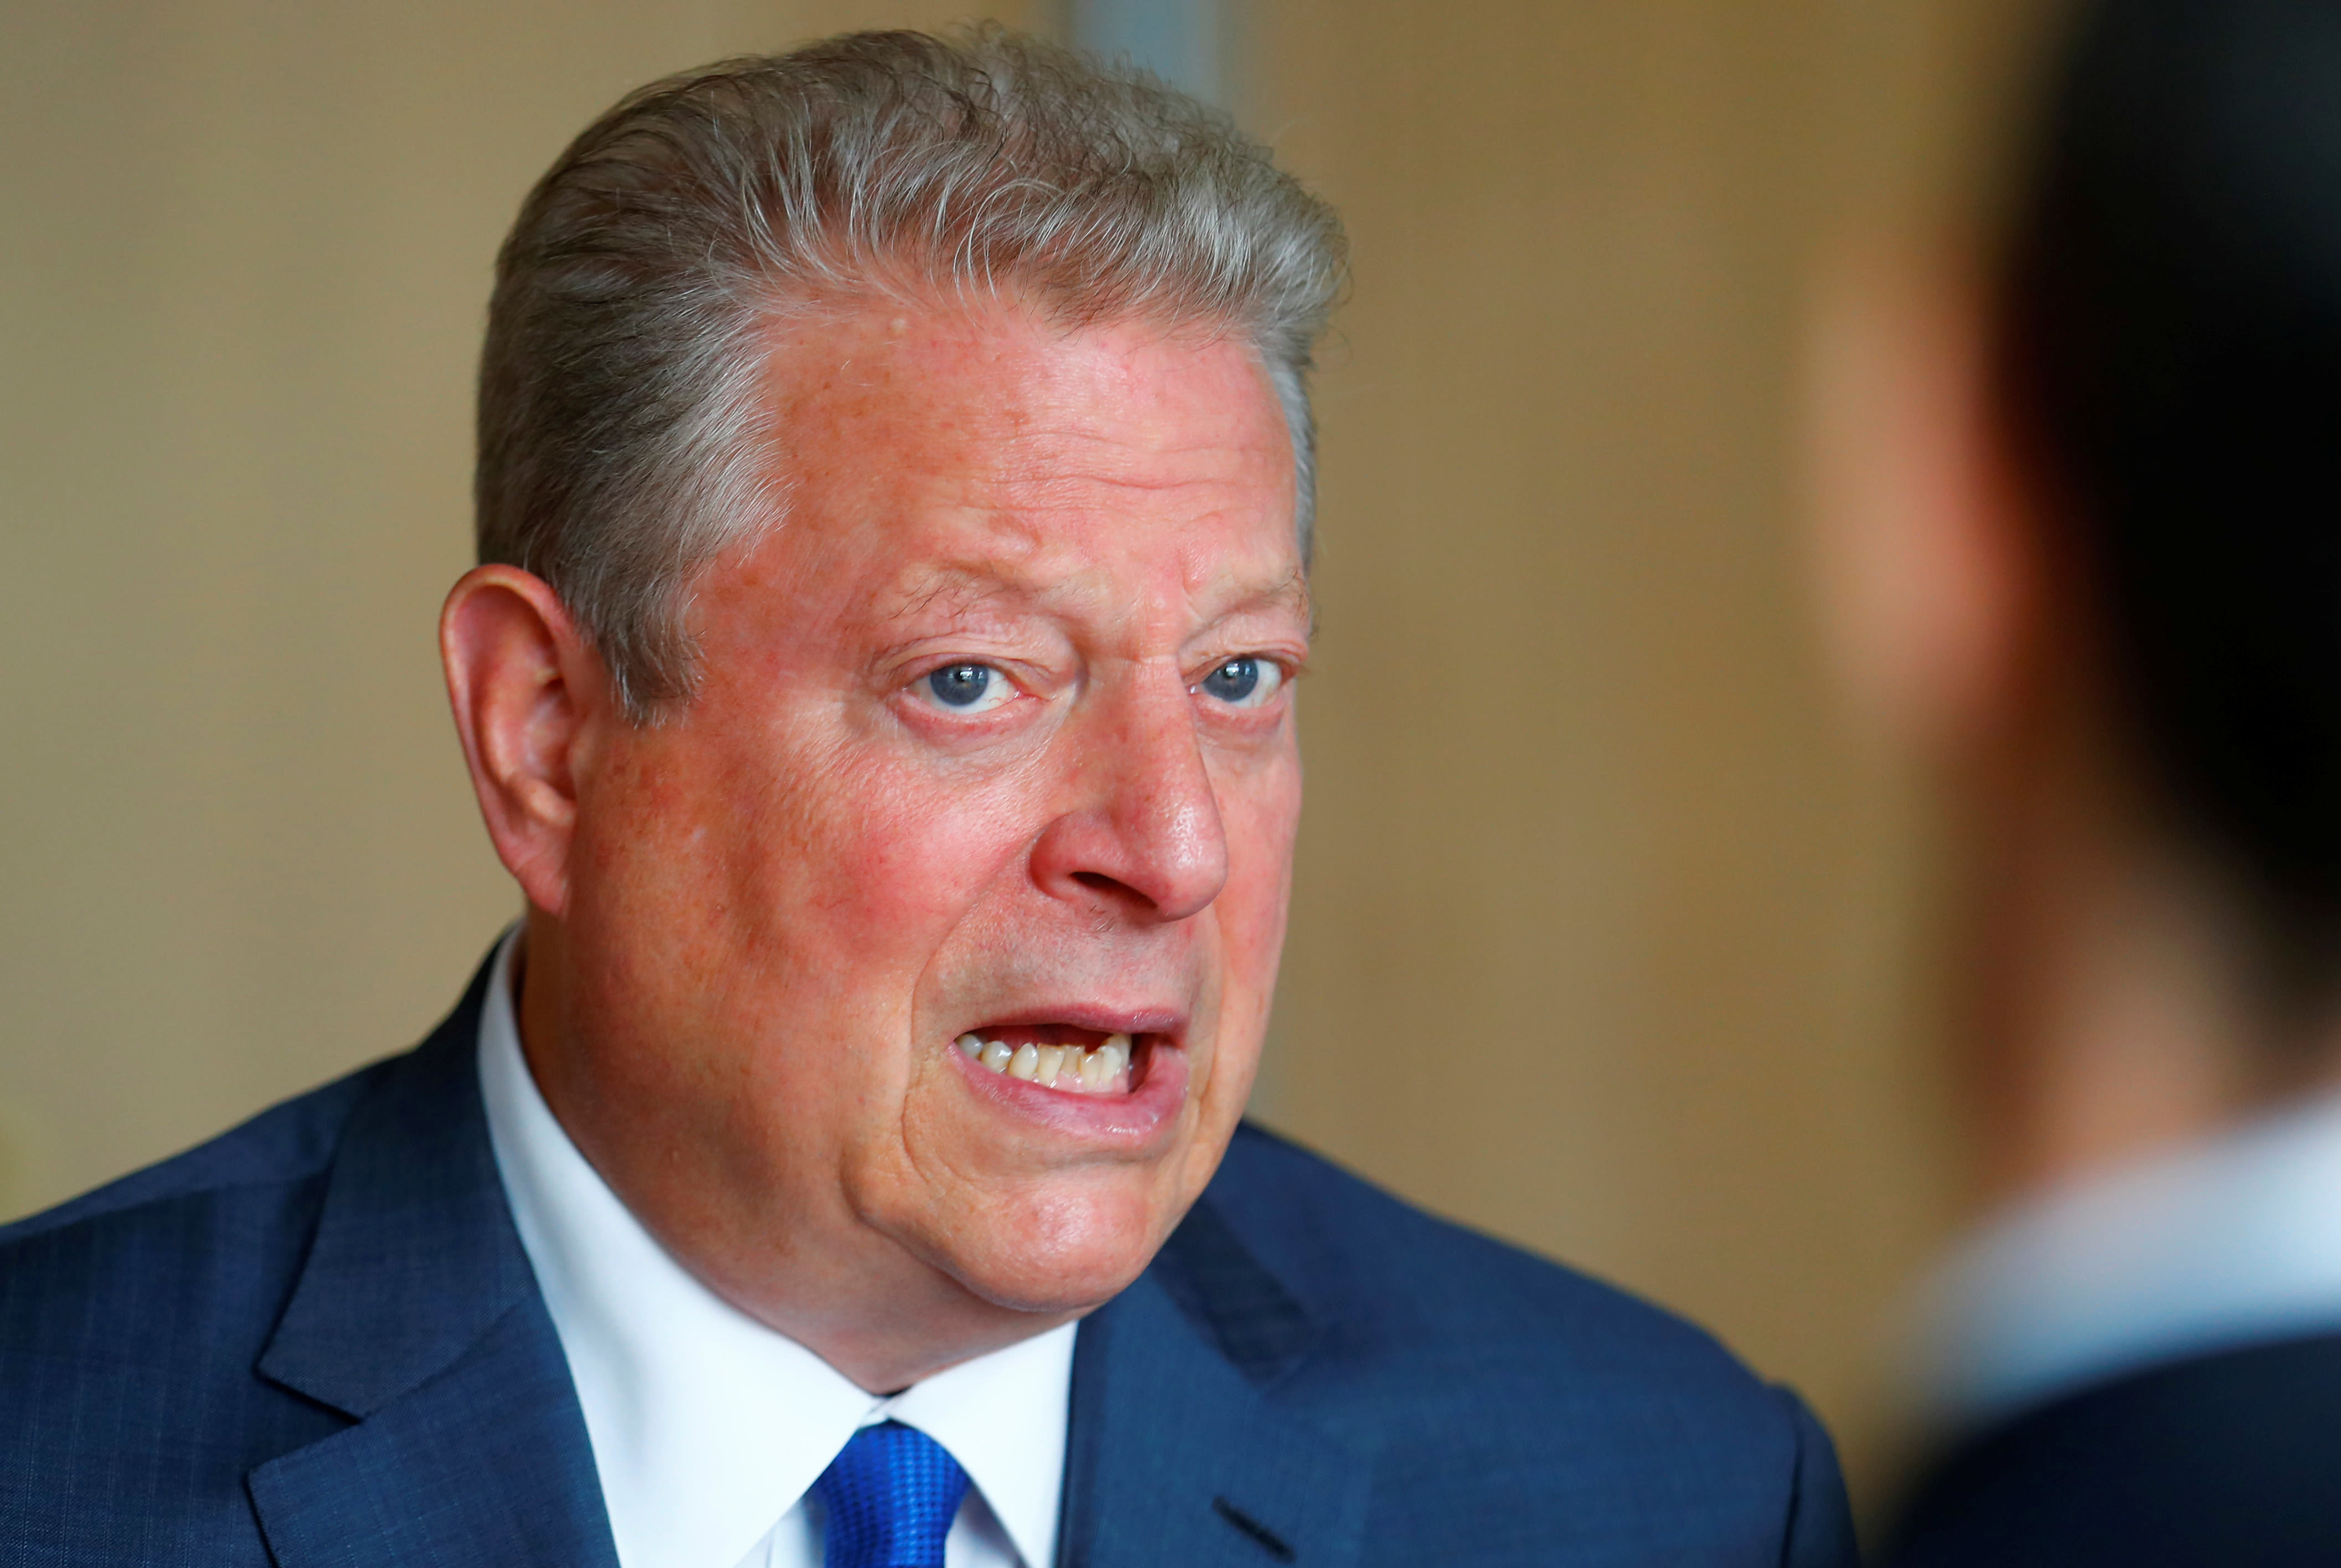 Former Vice President Al Gore advises Trump to resign